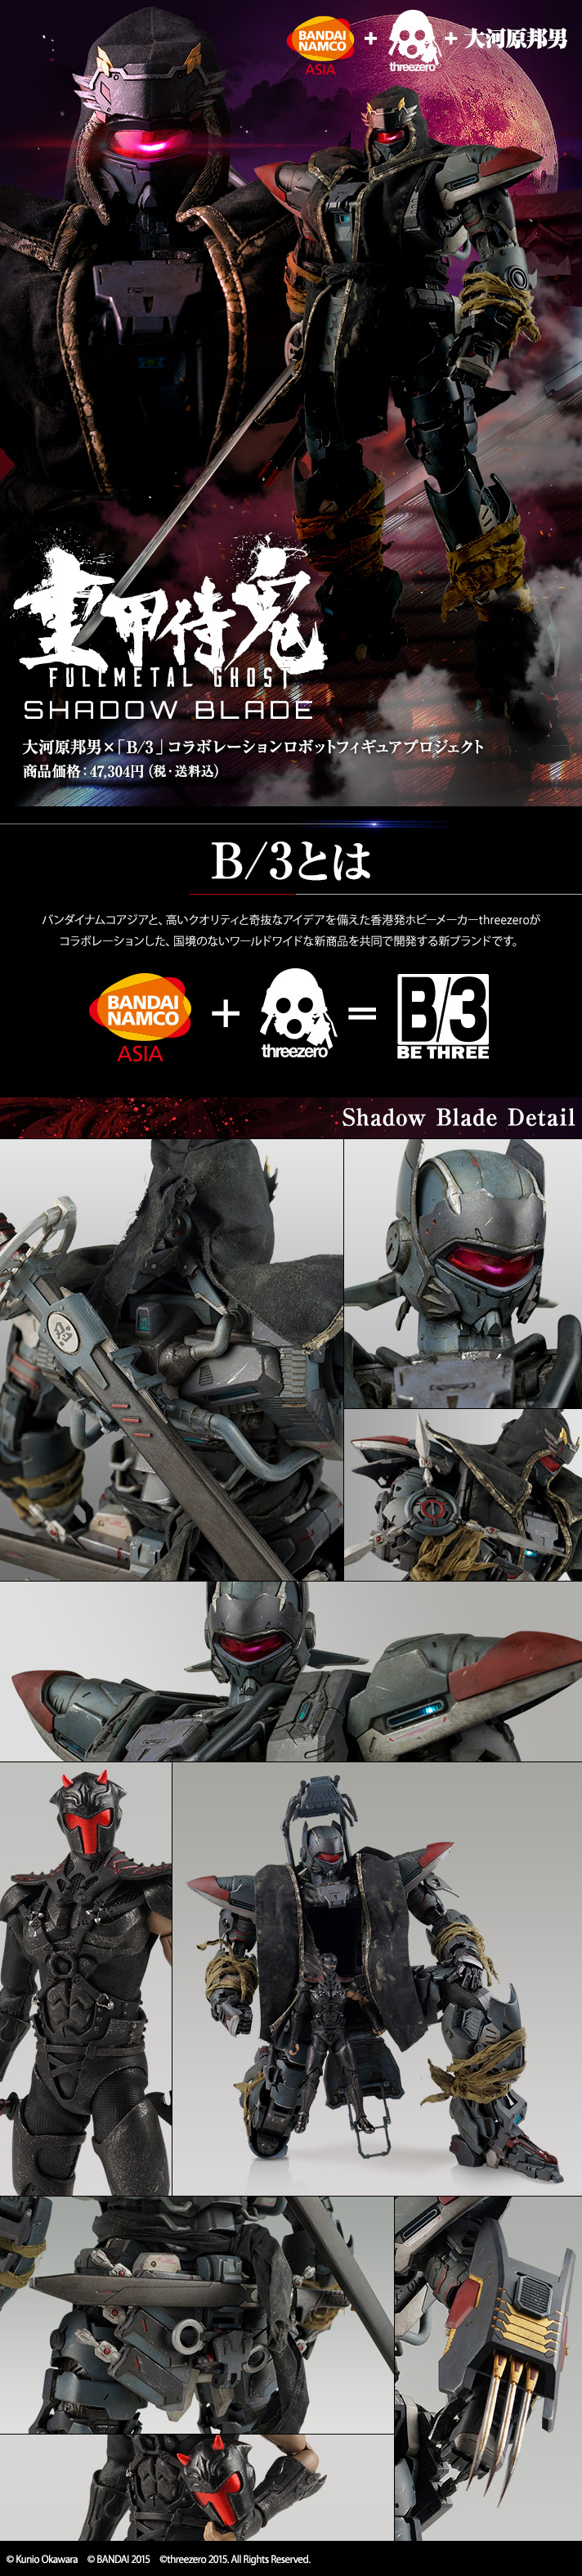 B 3 重甲侍鬼 フルメタルゴースト 1 12 Shadow Blade 趣味 コレクション プレミアムバンダイ公式通販